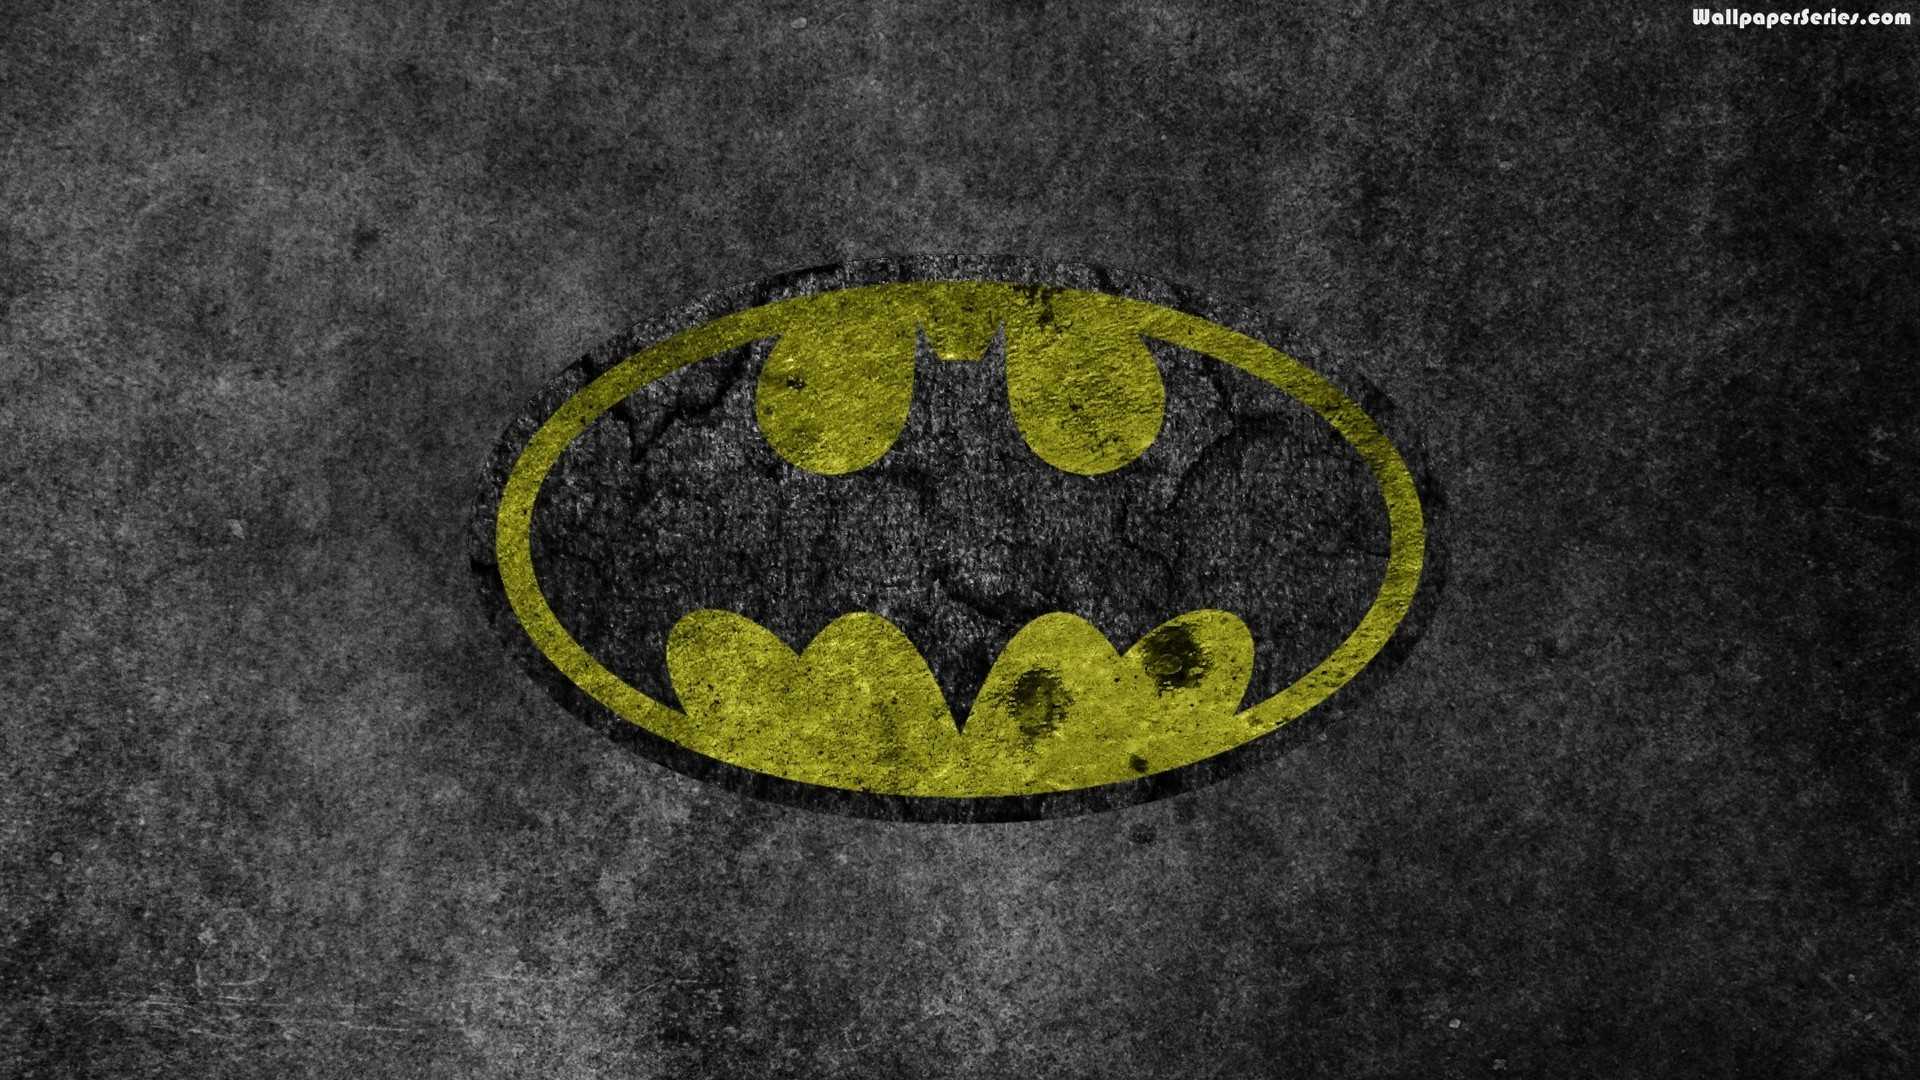 Batman Logo Wallpaper Computer Widescreen For HD Of Mobile Phones